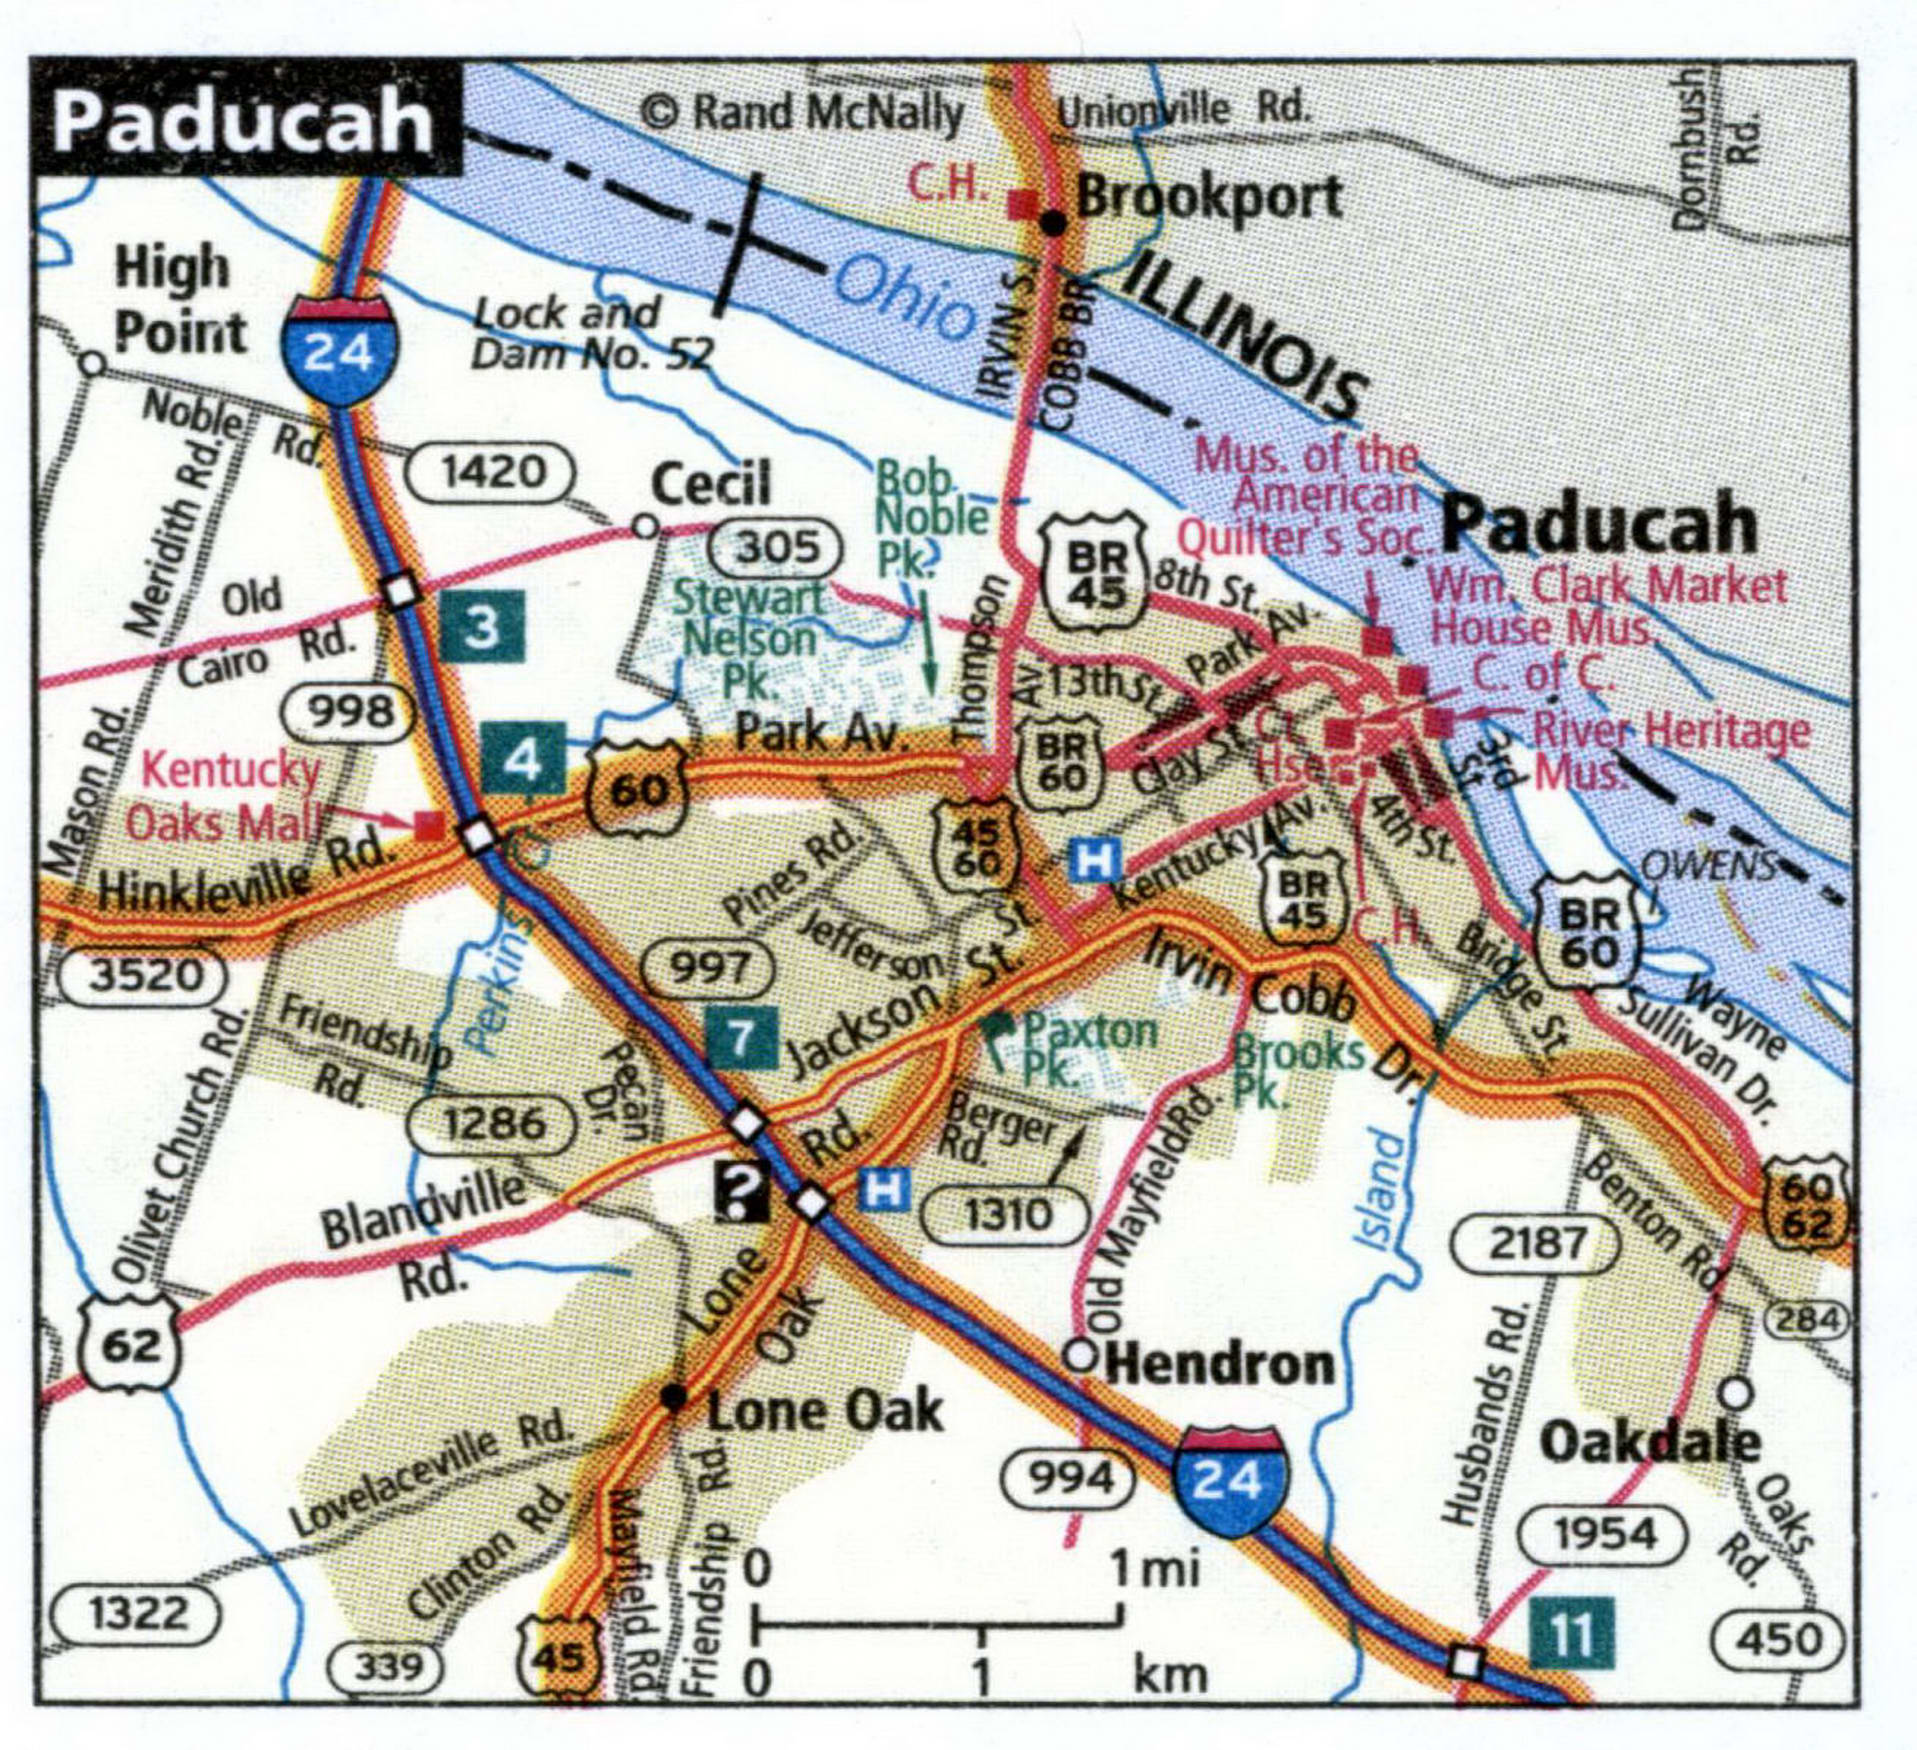 Paducah map for truckers